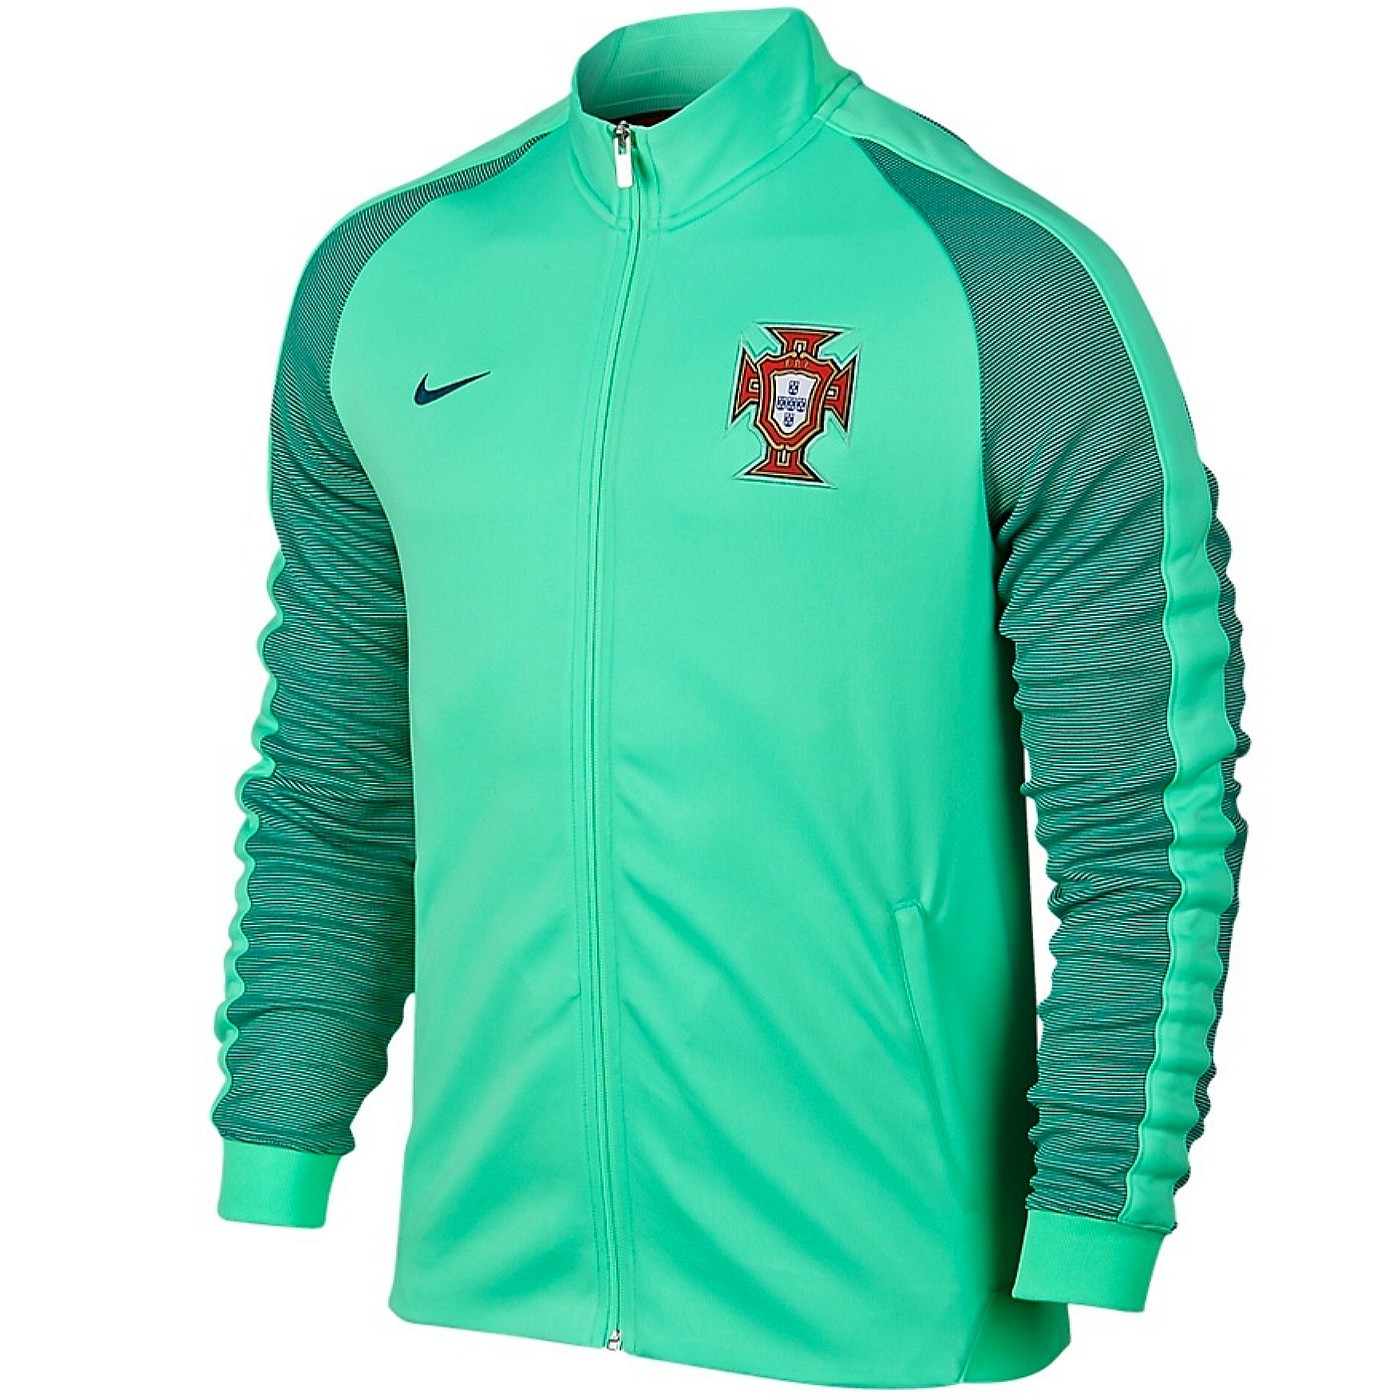 Portugal Football N98 Presentation Jacket 2016 17 Green Nike